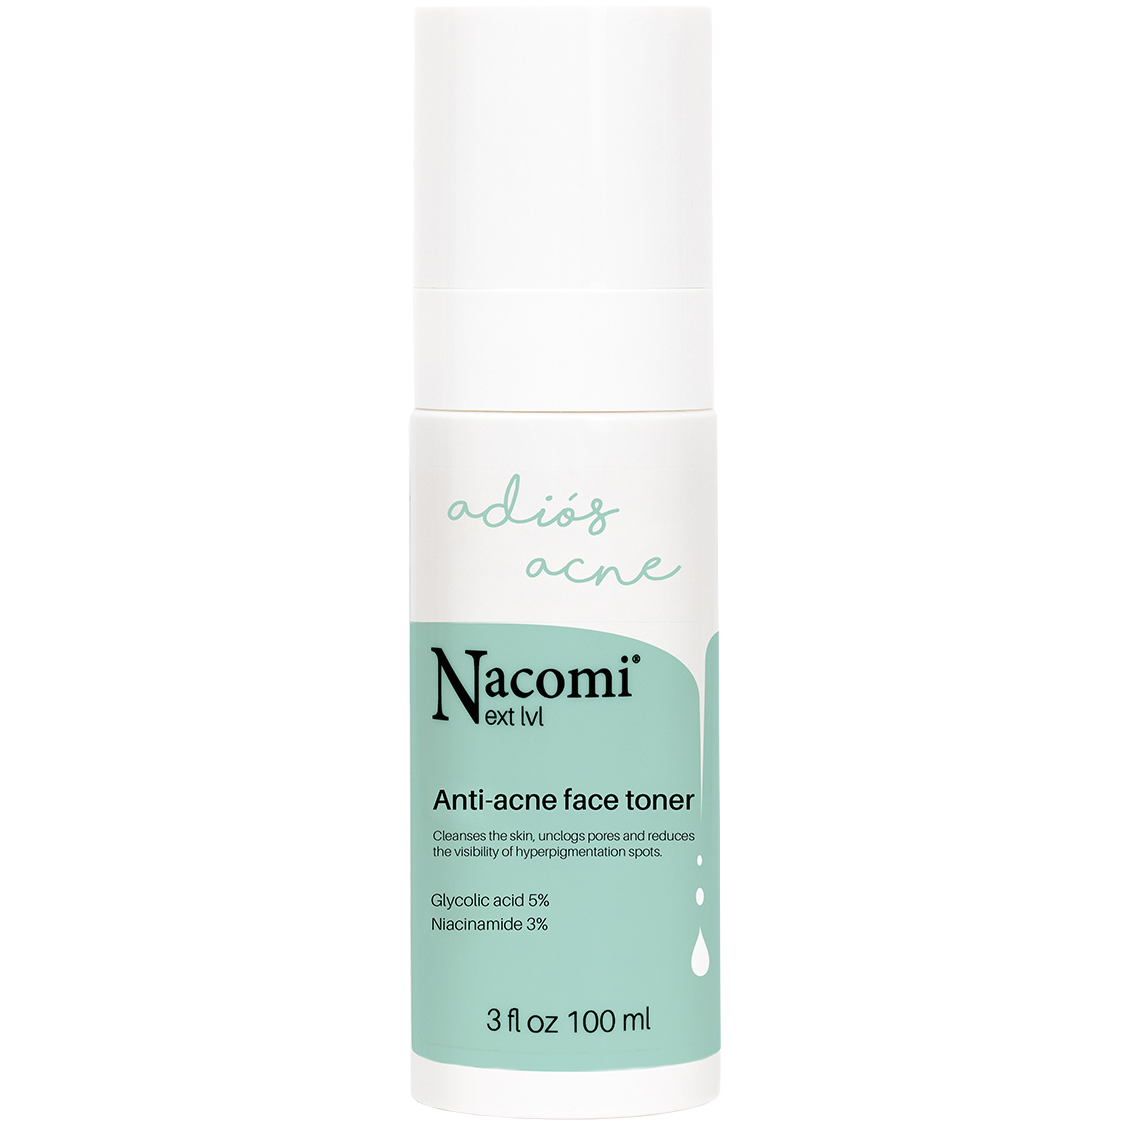 Nacomi Next Level тоник для лица против прыщей, 100 мл nacomi тоник против прыщей для лица next level anti acne face toner 100мл